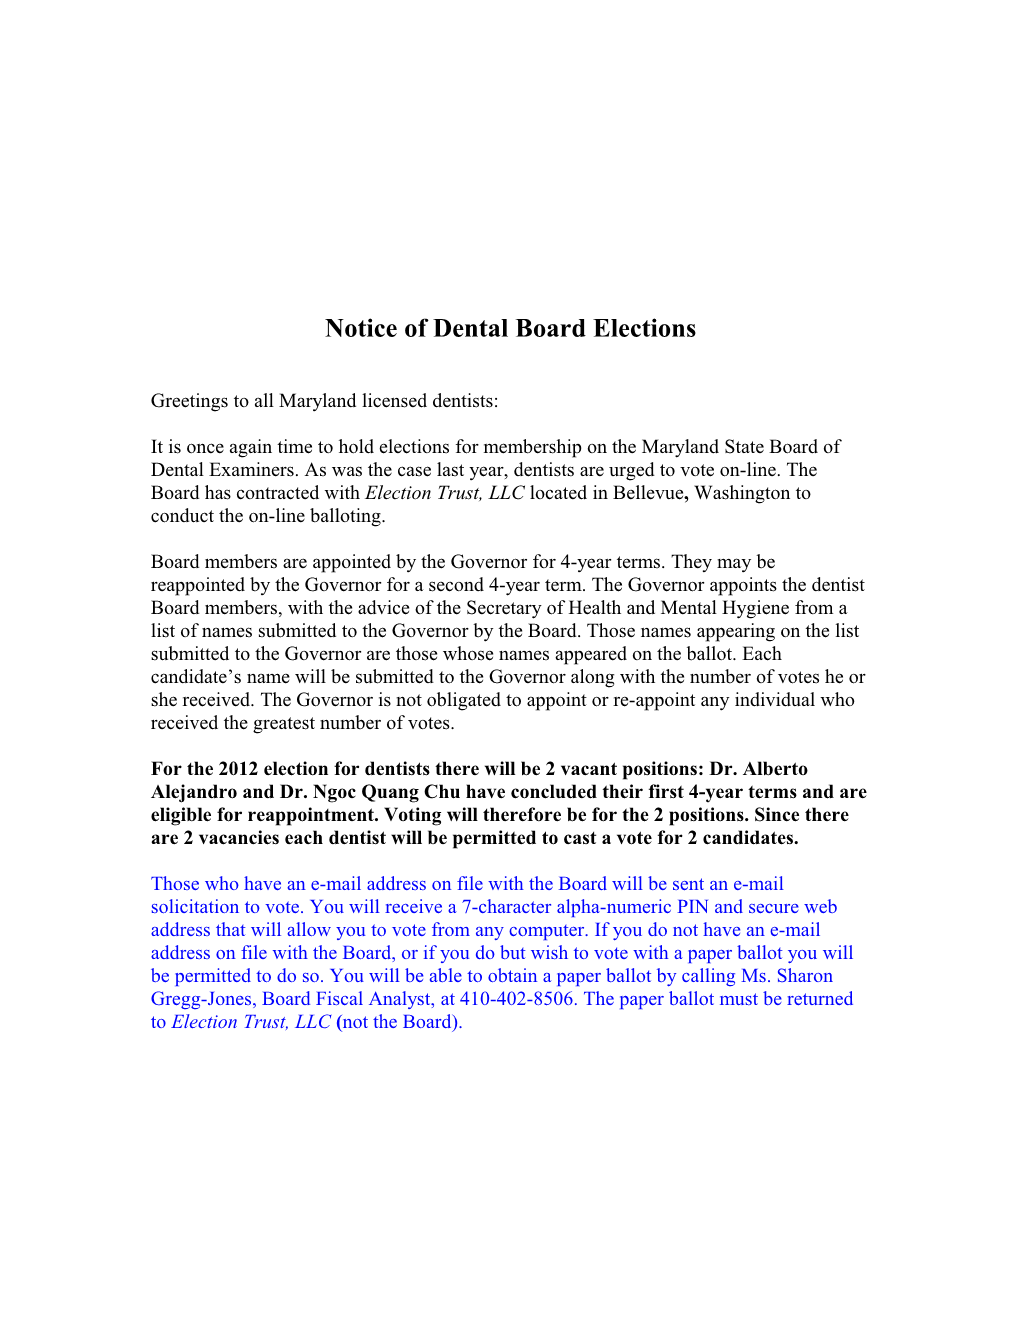 Notice of Dental Board Election